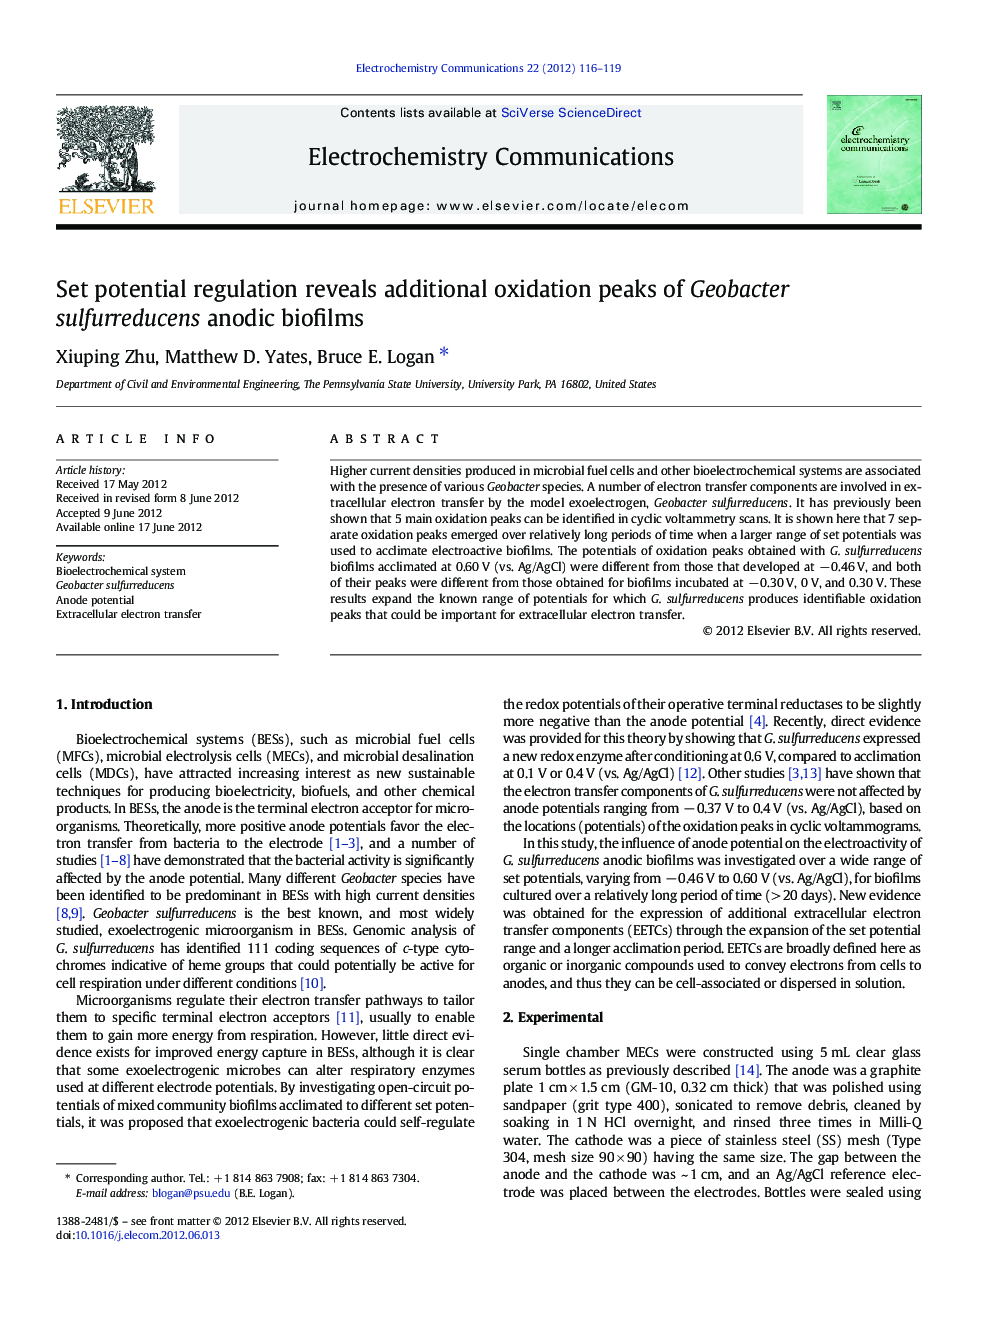 Set potential regulation reveals additional oxidation peaks of Geobacter sulfurreducens anodic biofilms